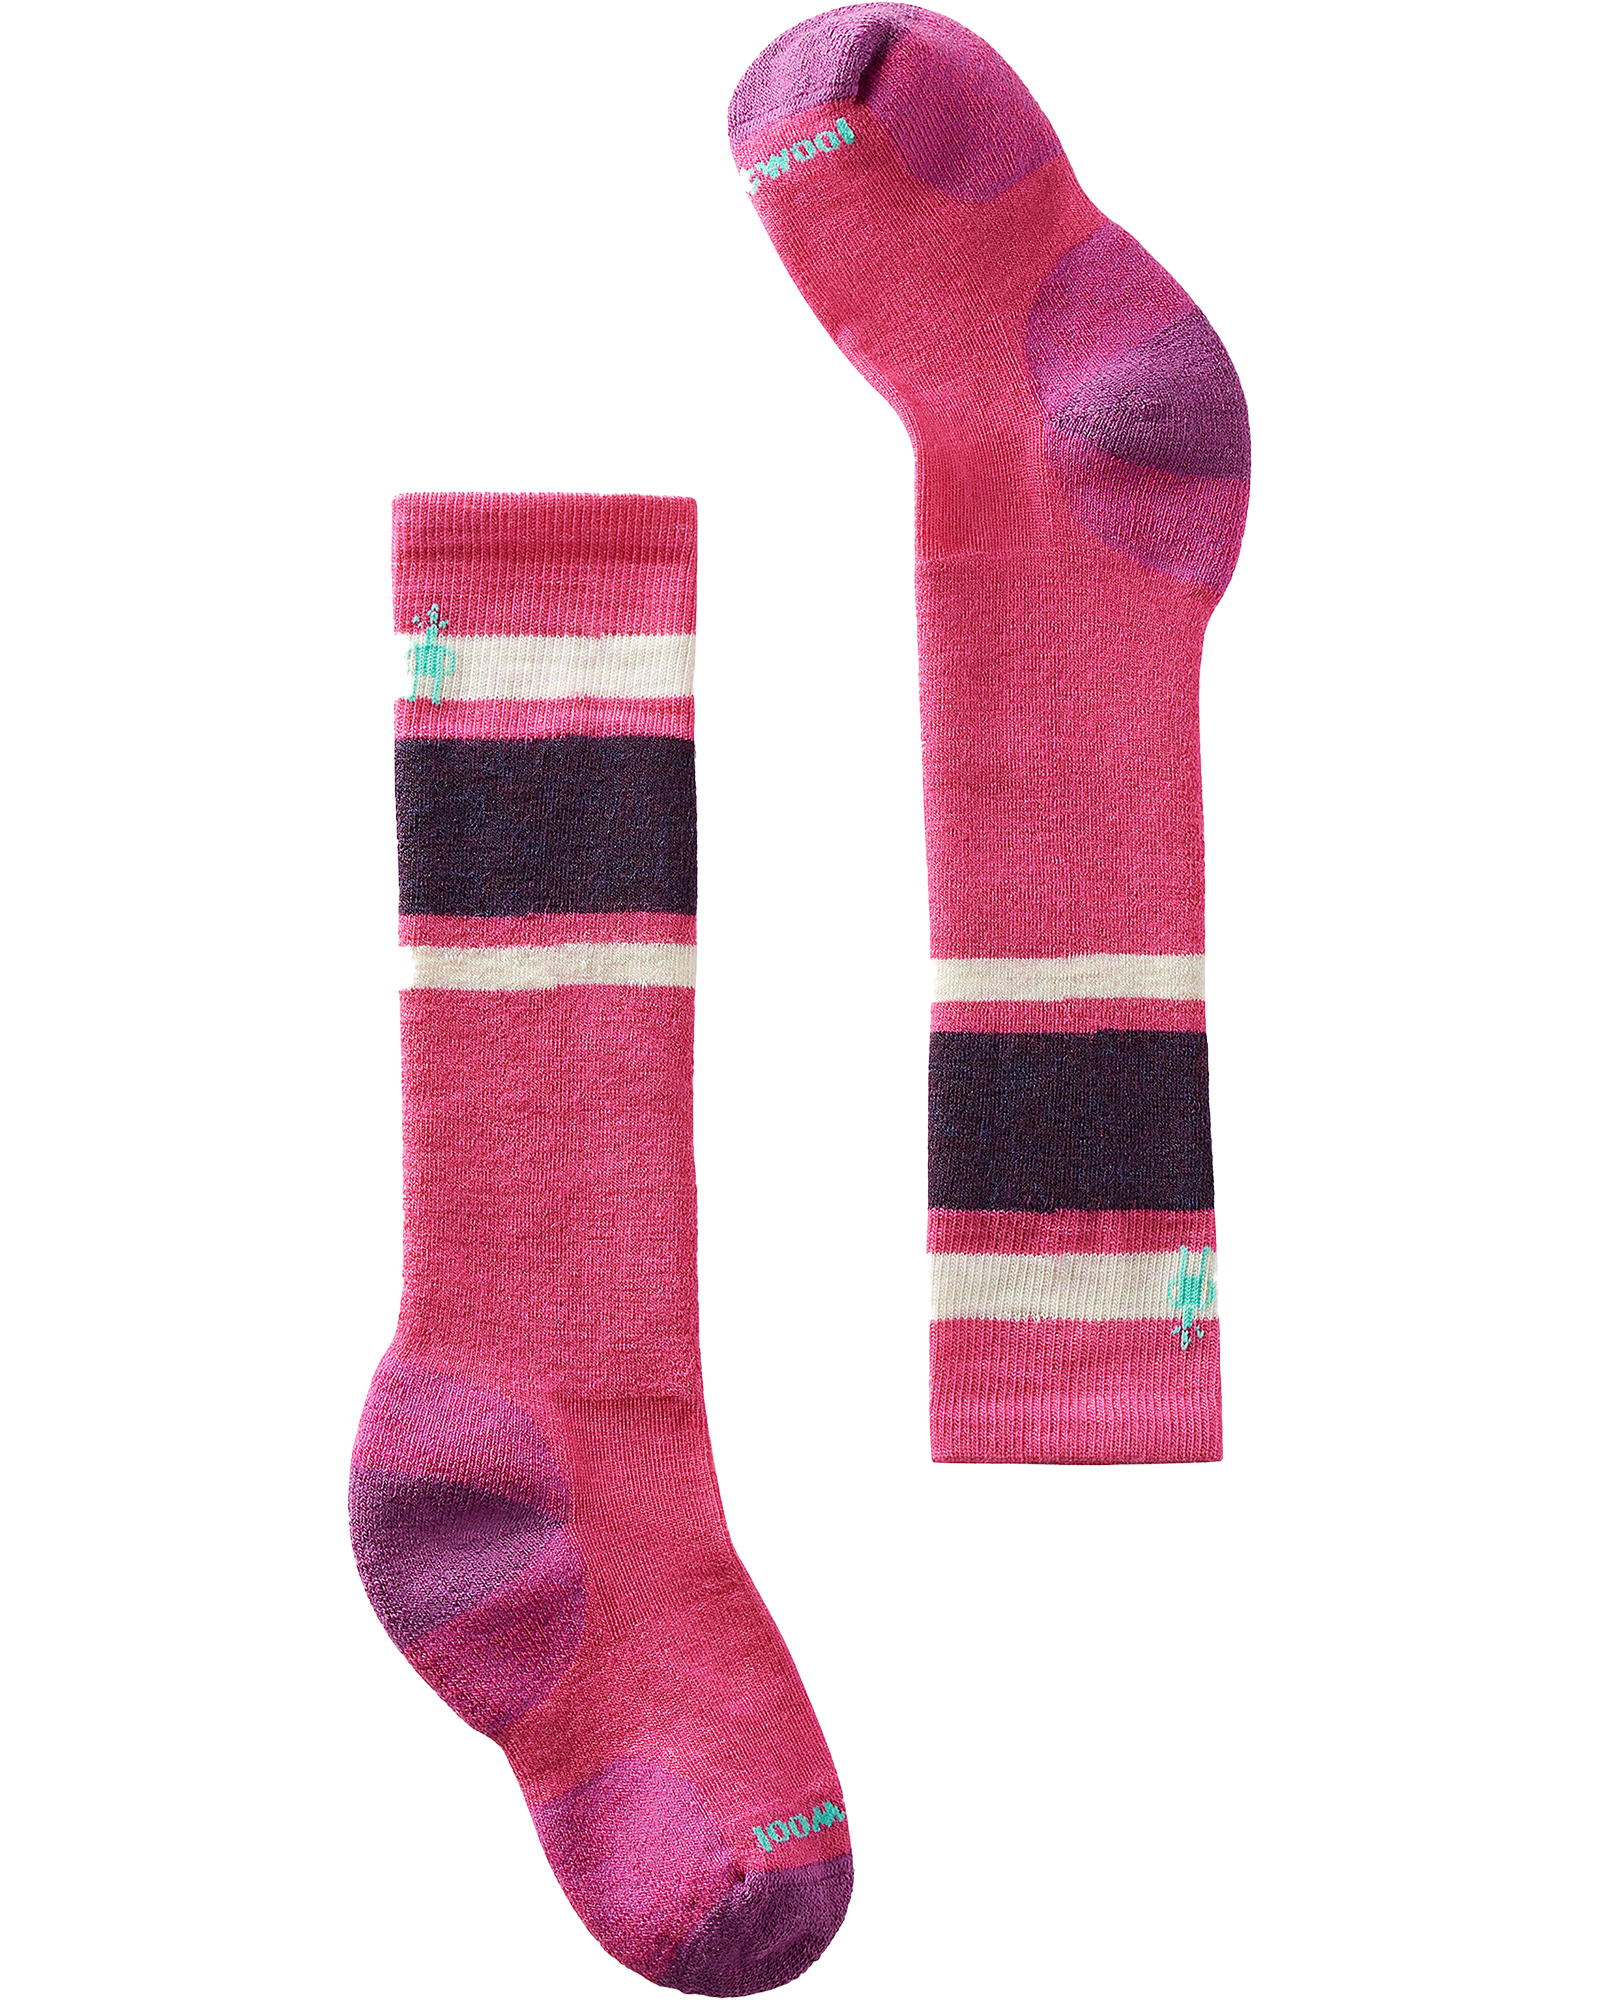 Smartwool Wintersport Full Cushion Kids’ Socks - Power Pink S